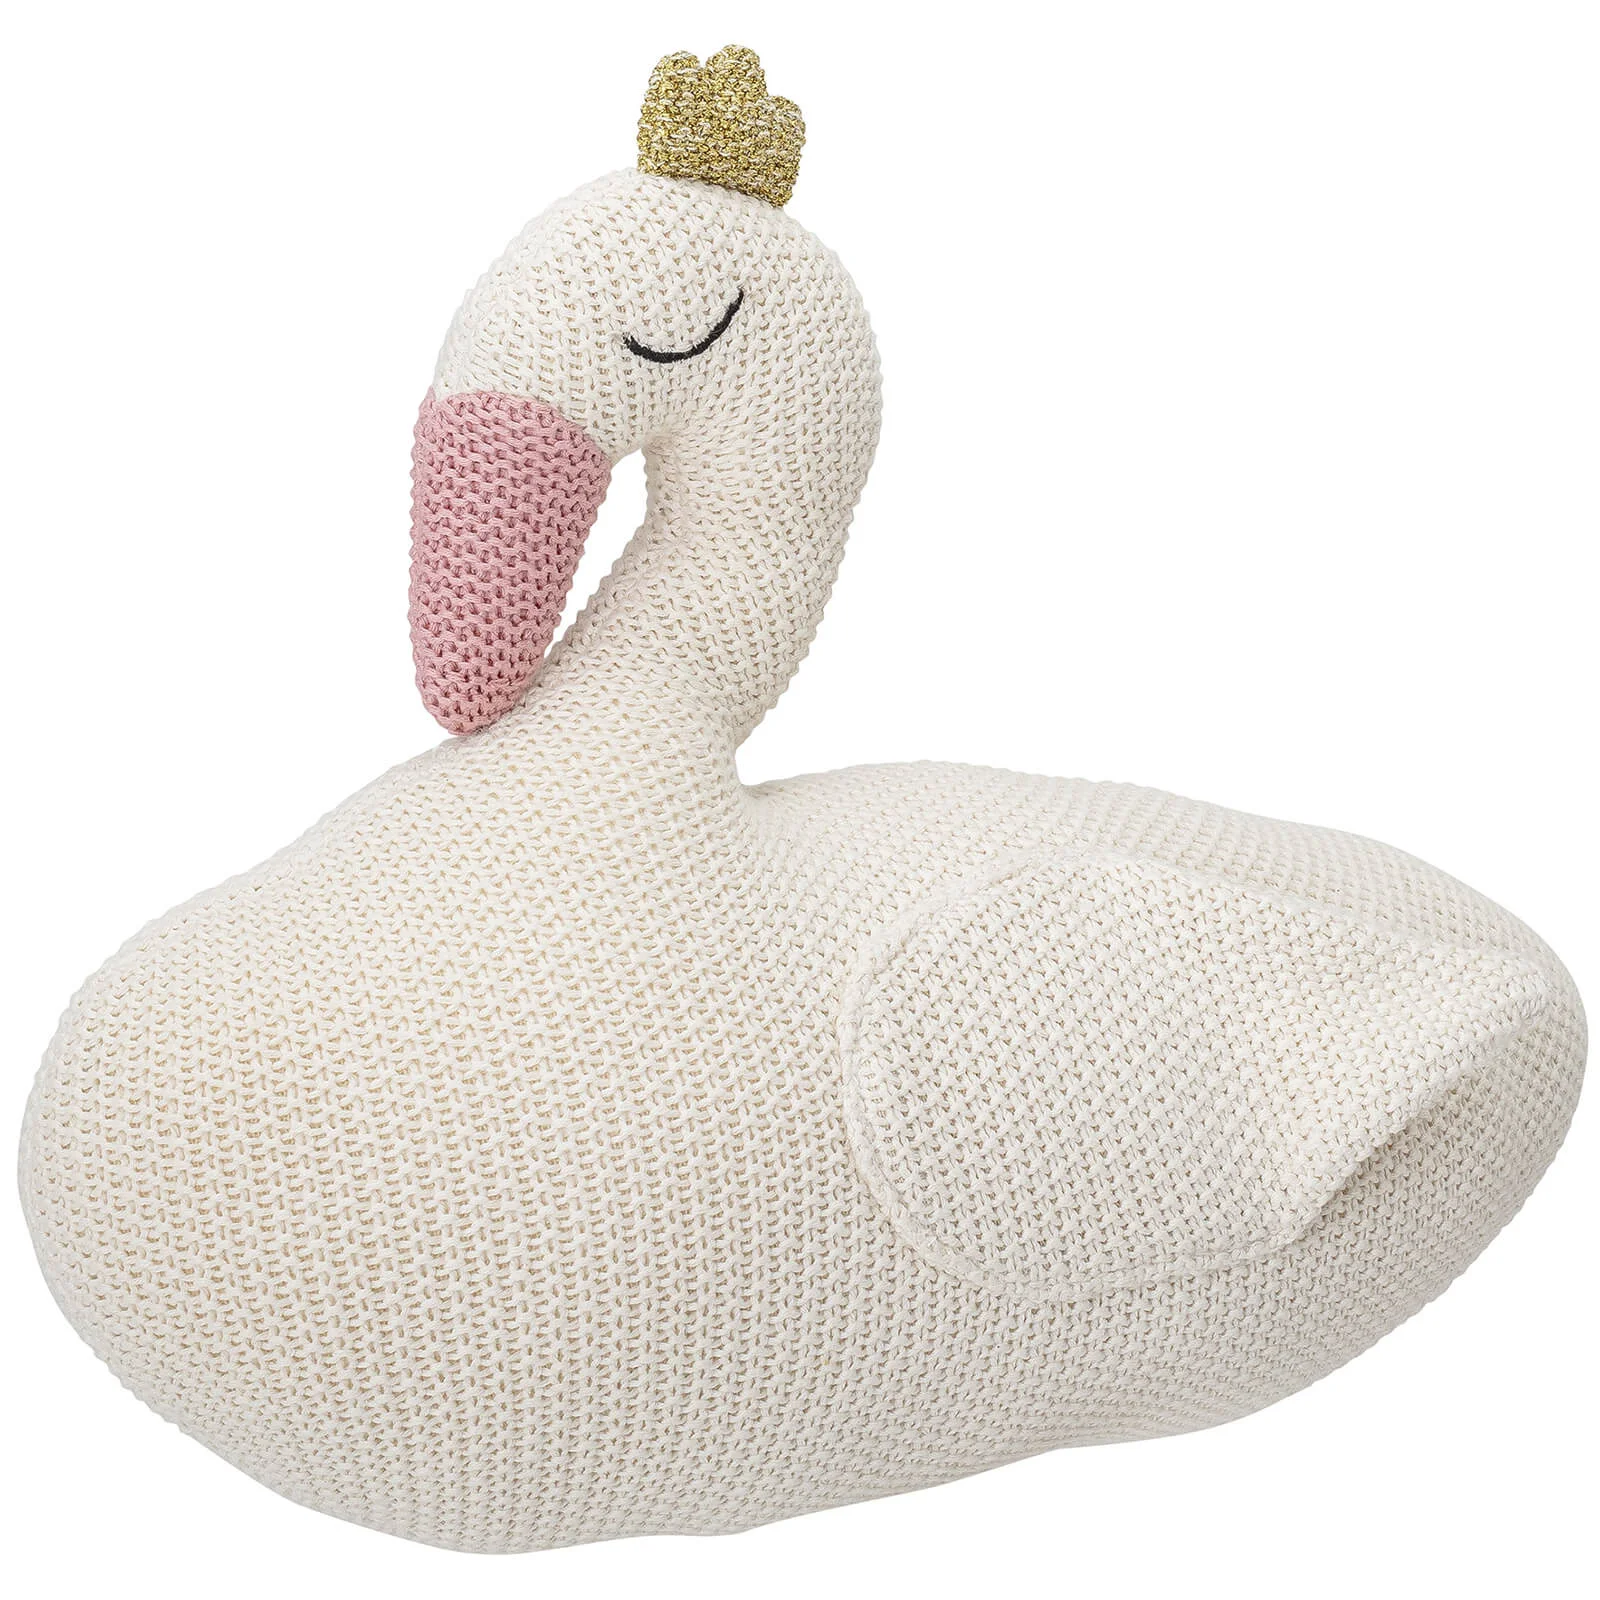 Bloomingville Swan Cushion Image 1